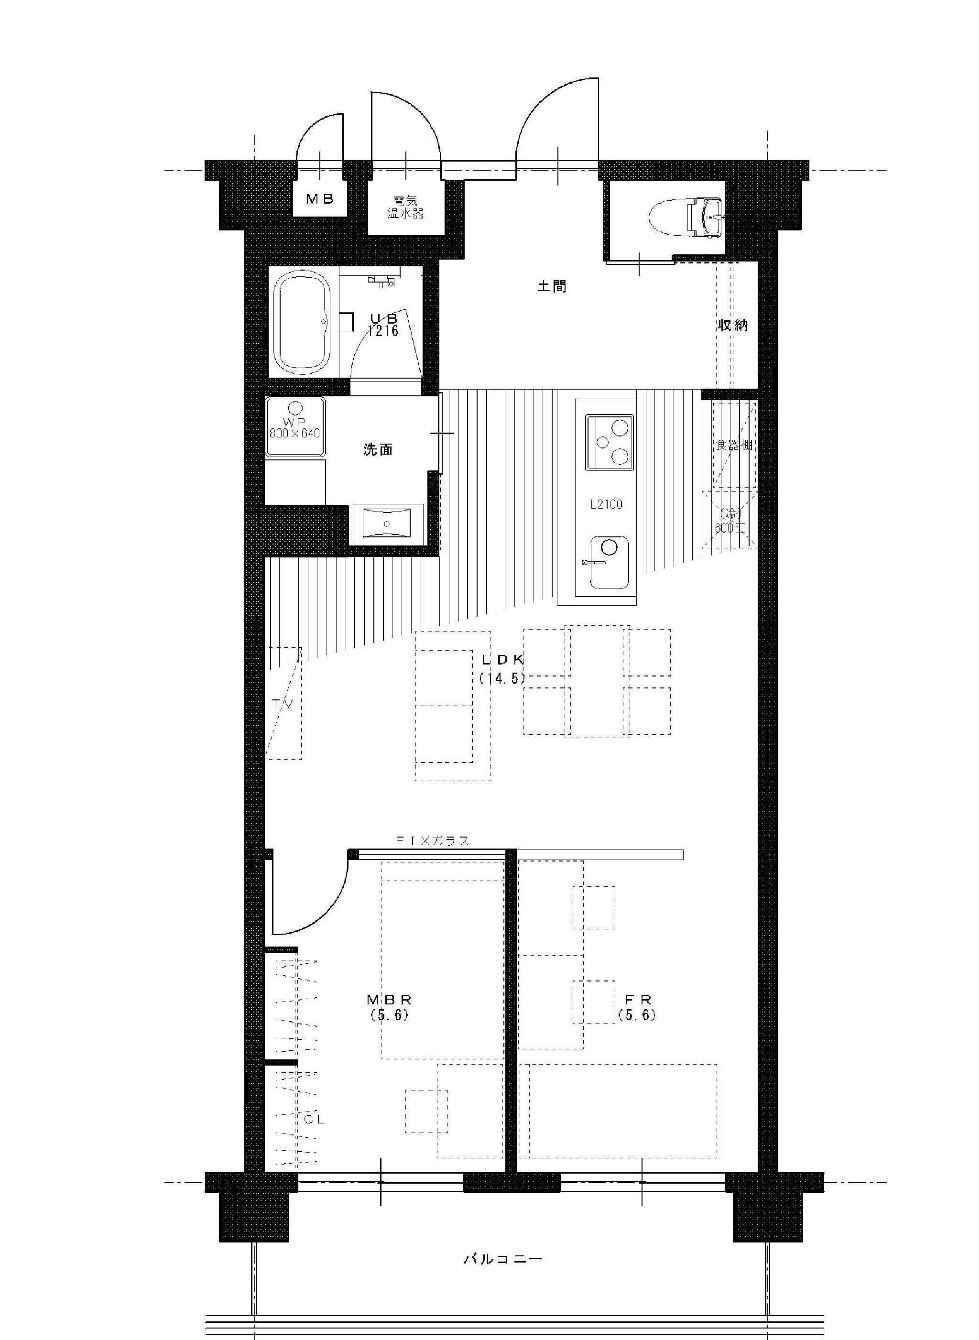 Floor plan. Price 15.8 million yen, Footprint 59.4 sq m , Balcony area 7.02 sq m renovation plan view